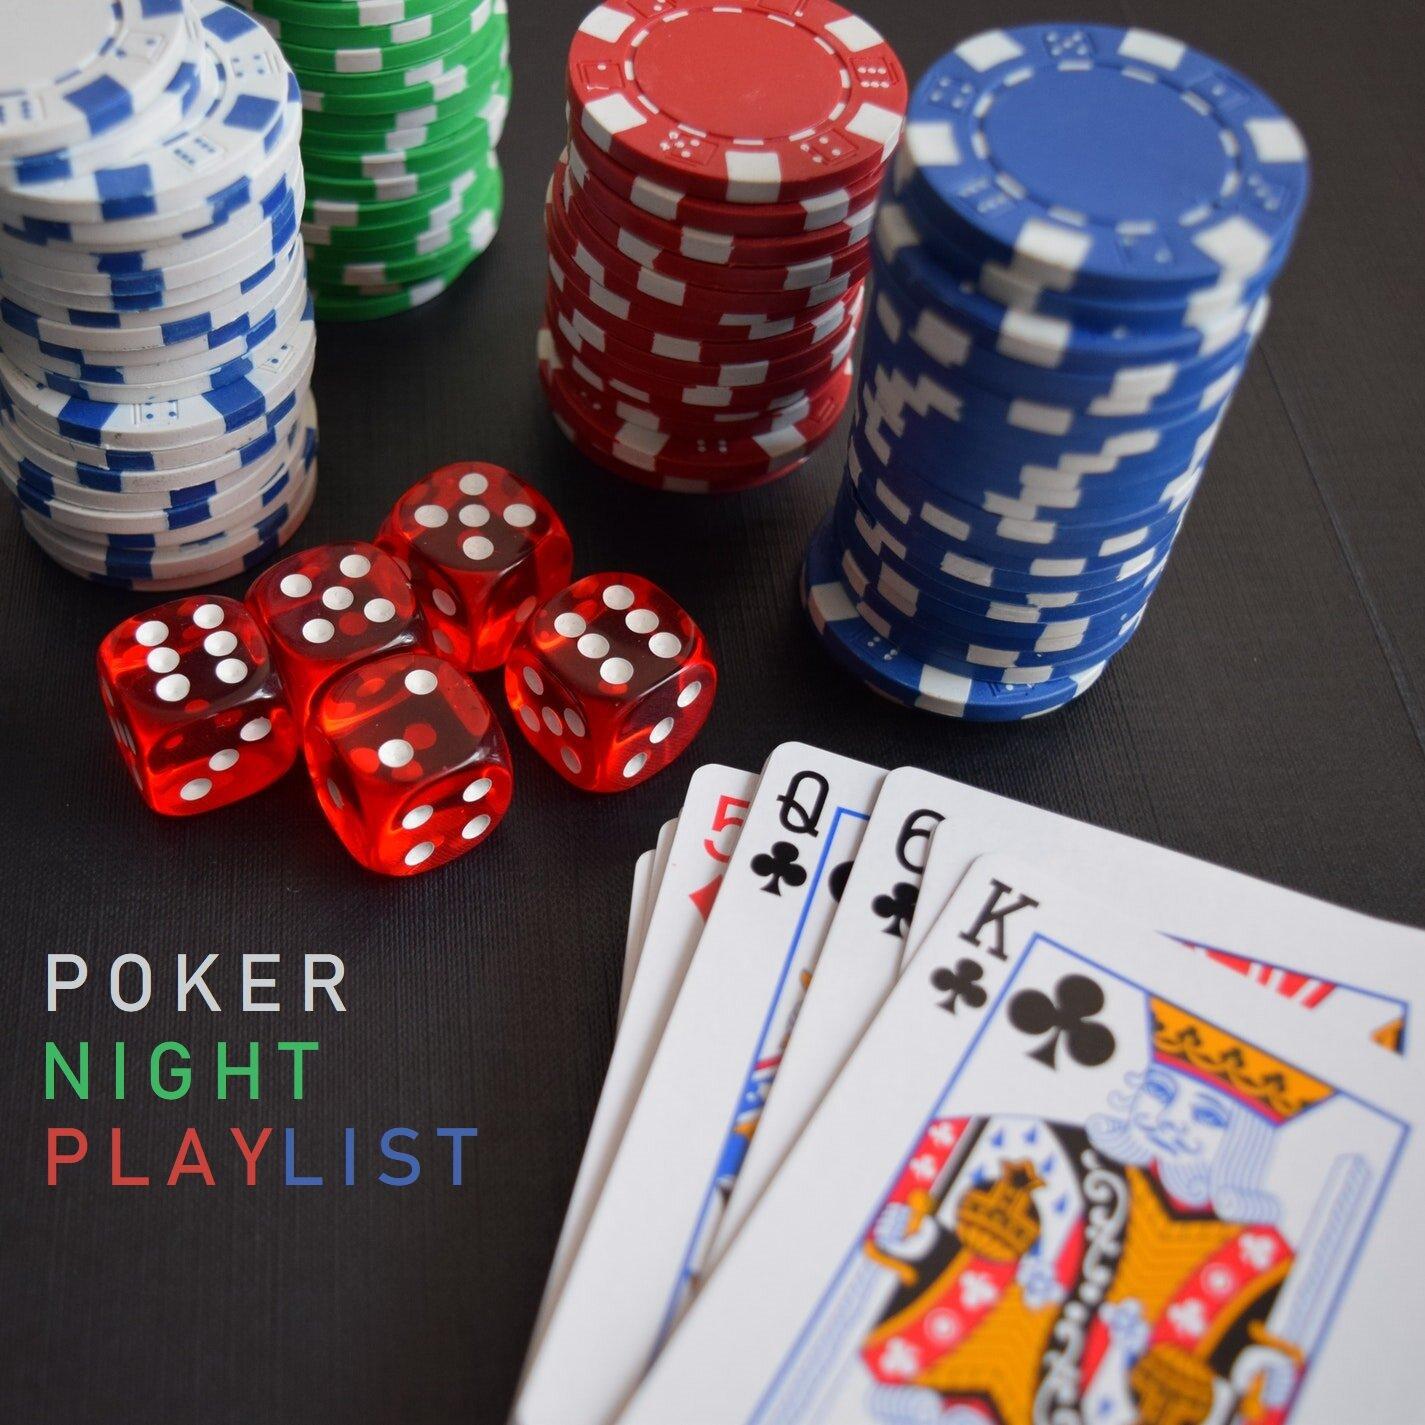 Friday Night is Poker Night